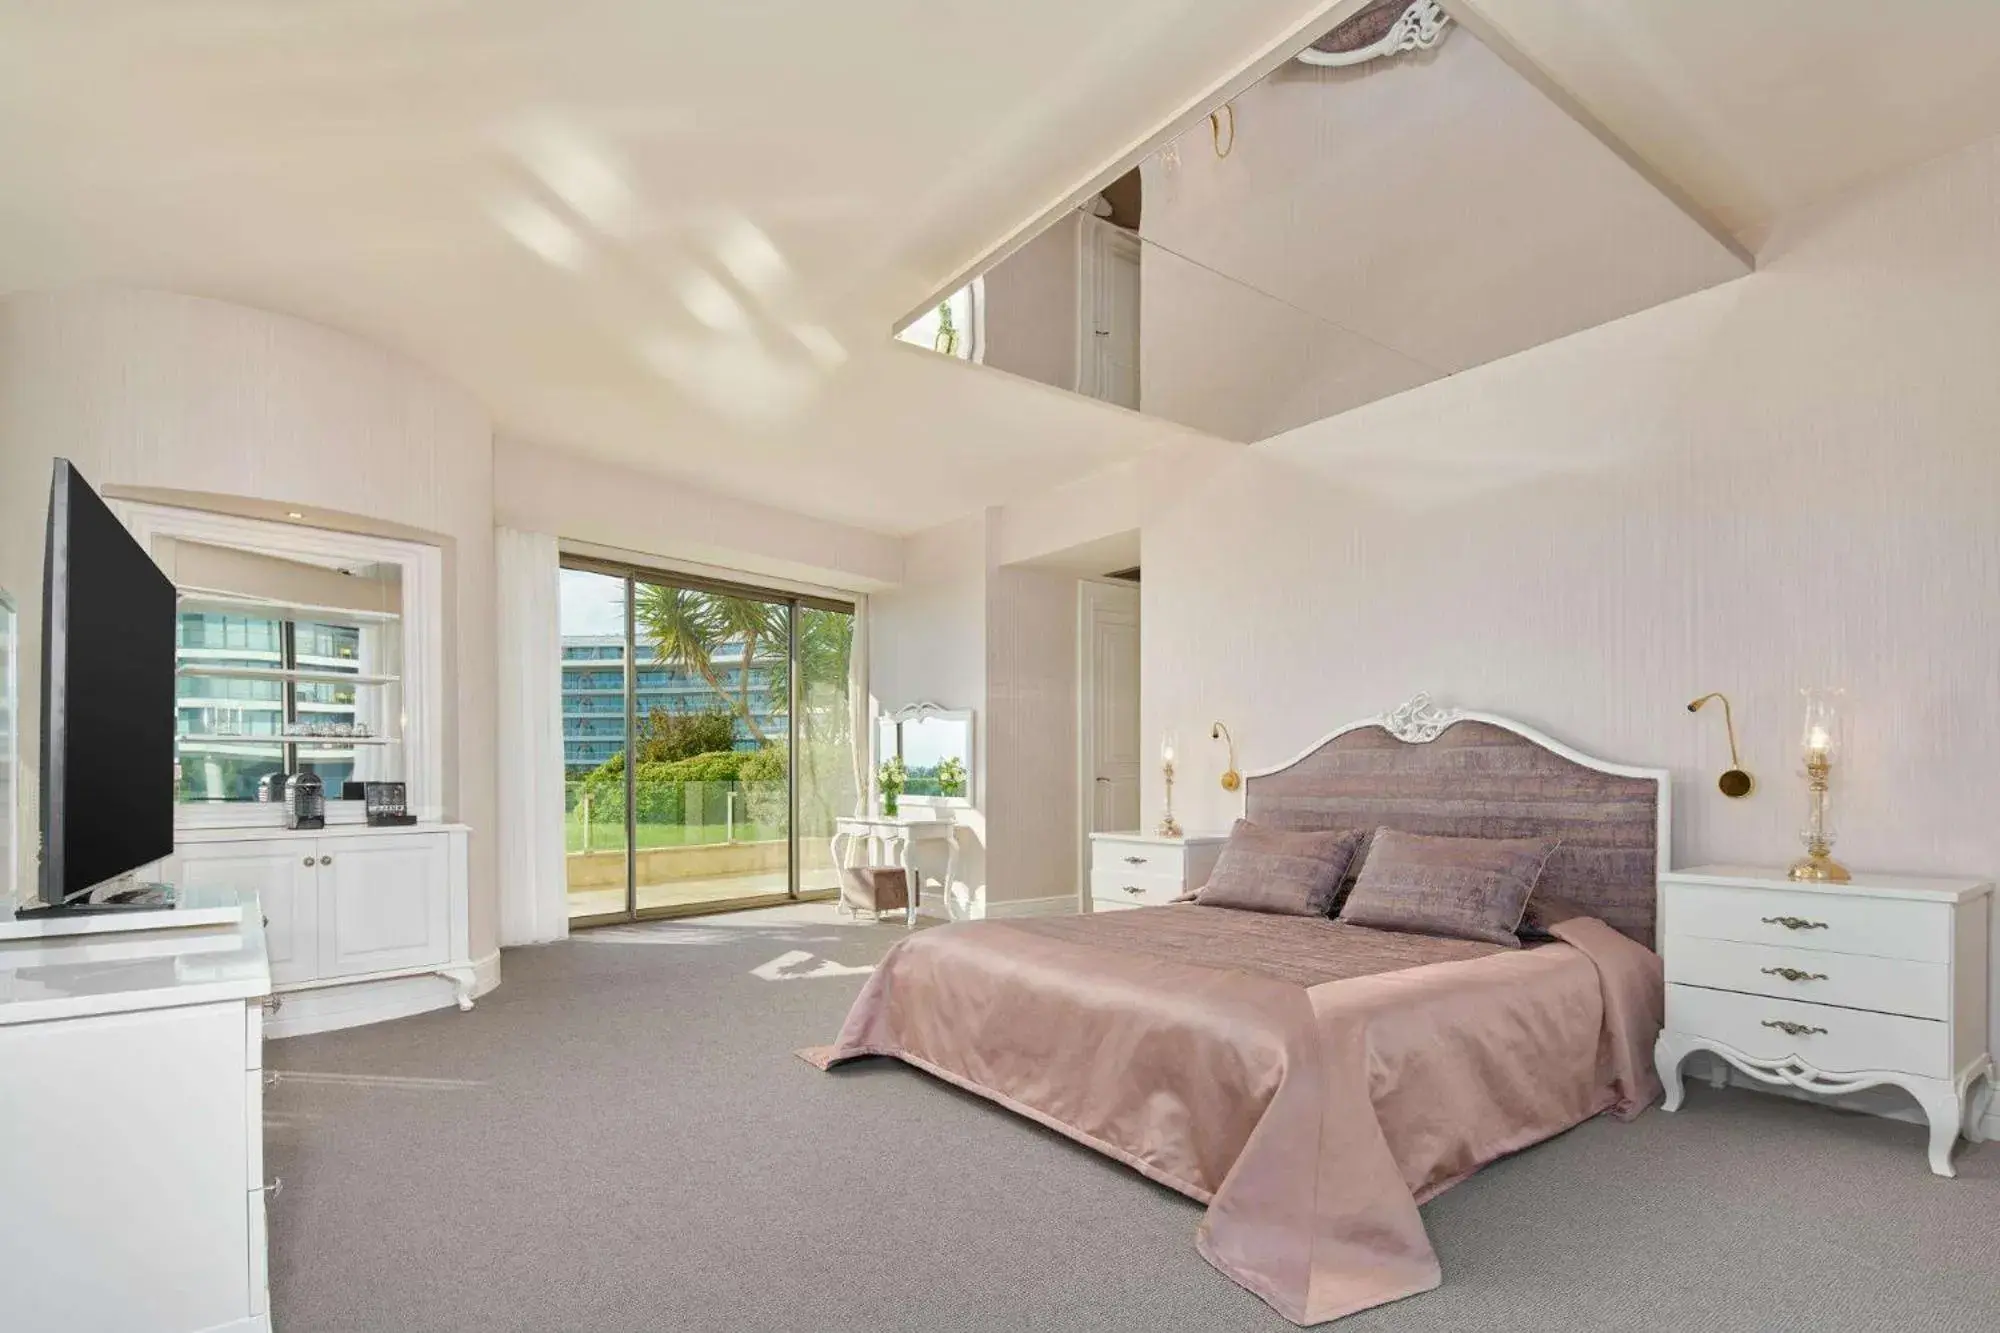 Bedroom in Maxx Royal Belek Golf Resort 